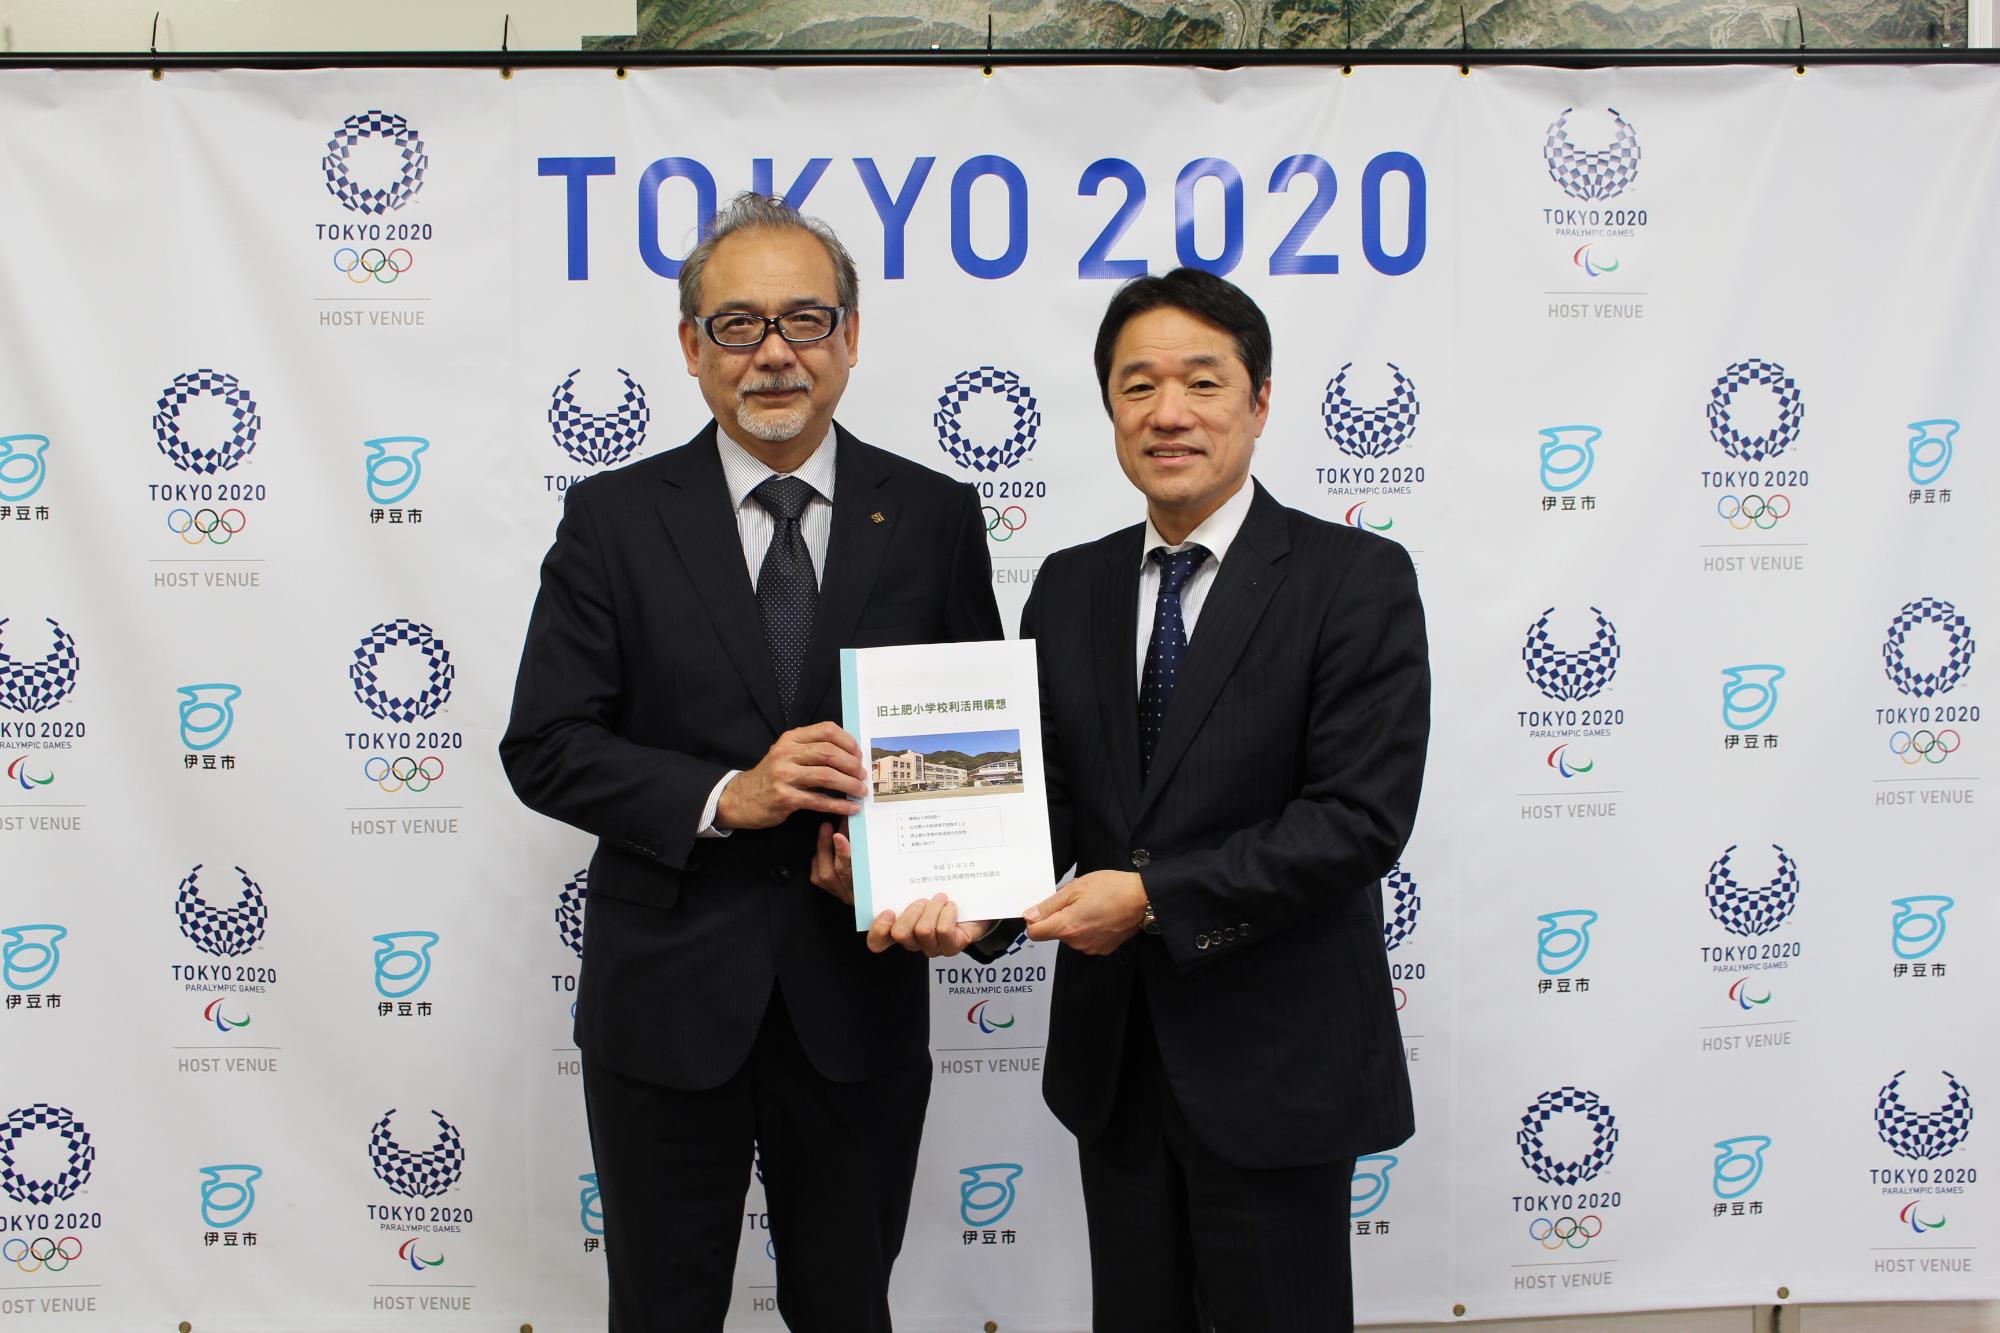 TOKYO2020の会見パネルの前で活用構想をまとめた資料を持つ作山会長と菊池市長の写真